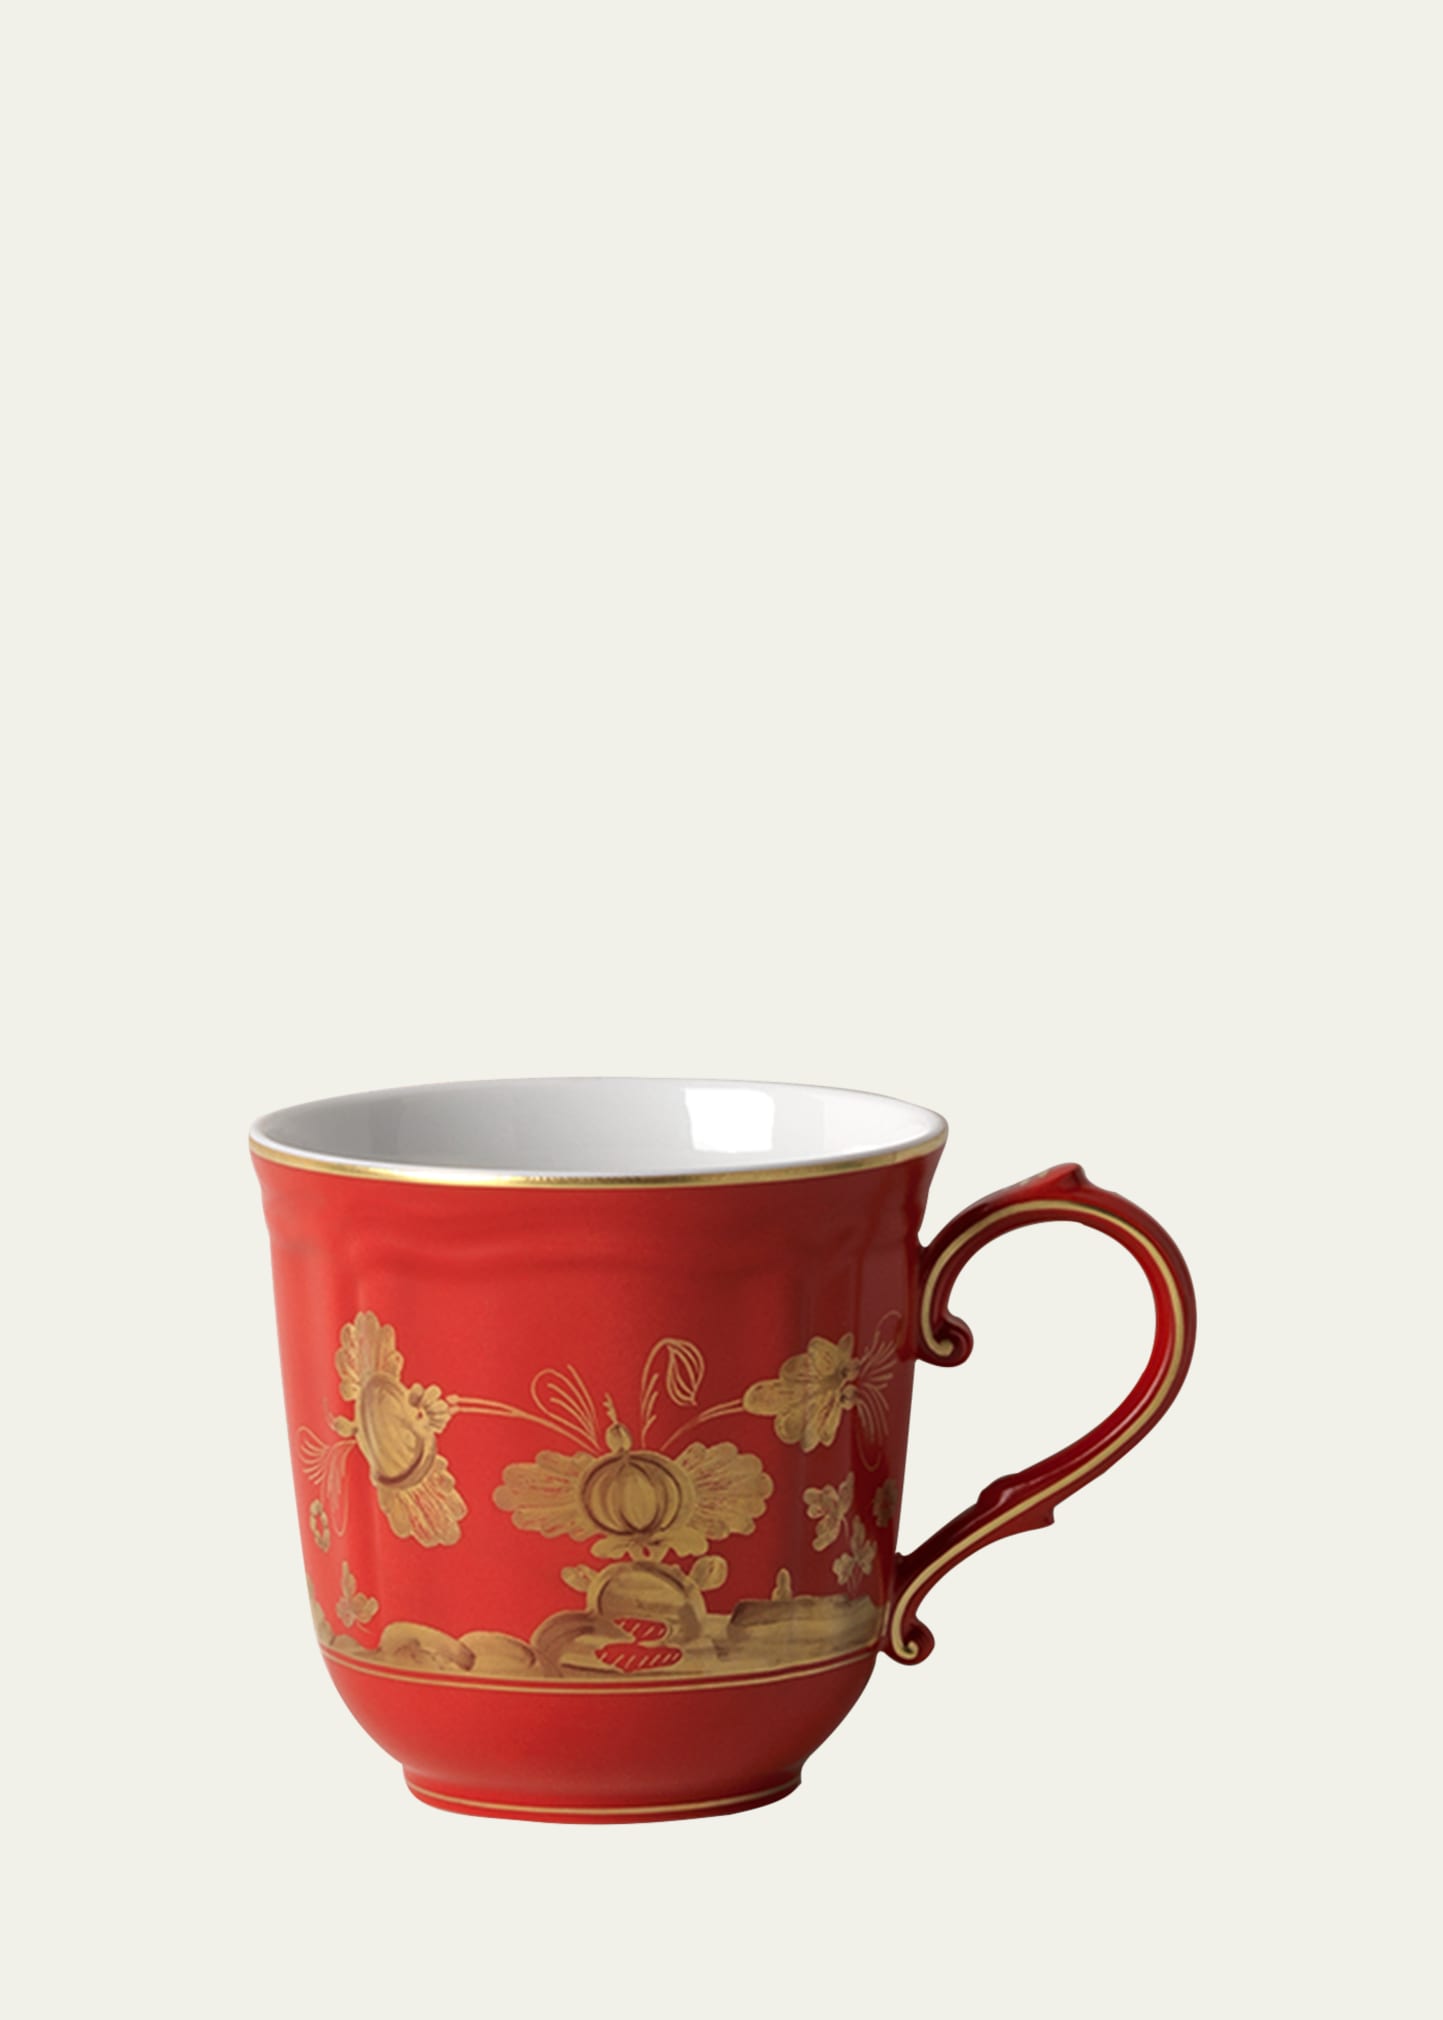 Ginori 1735 Oriente Italiano Gold Mug, Rubrum In Red